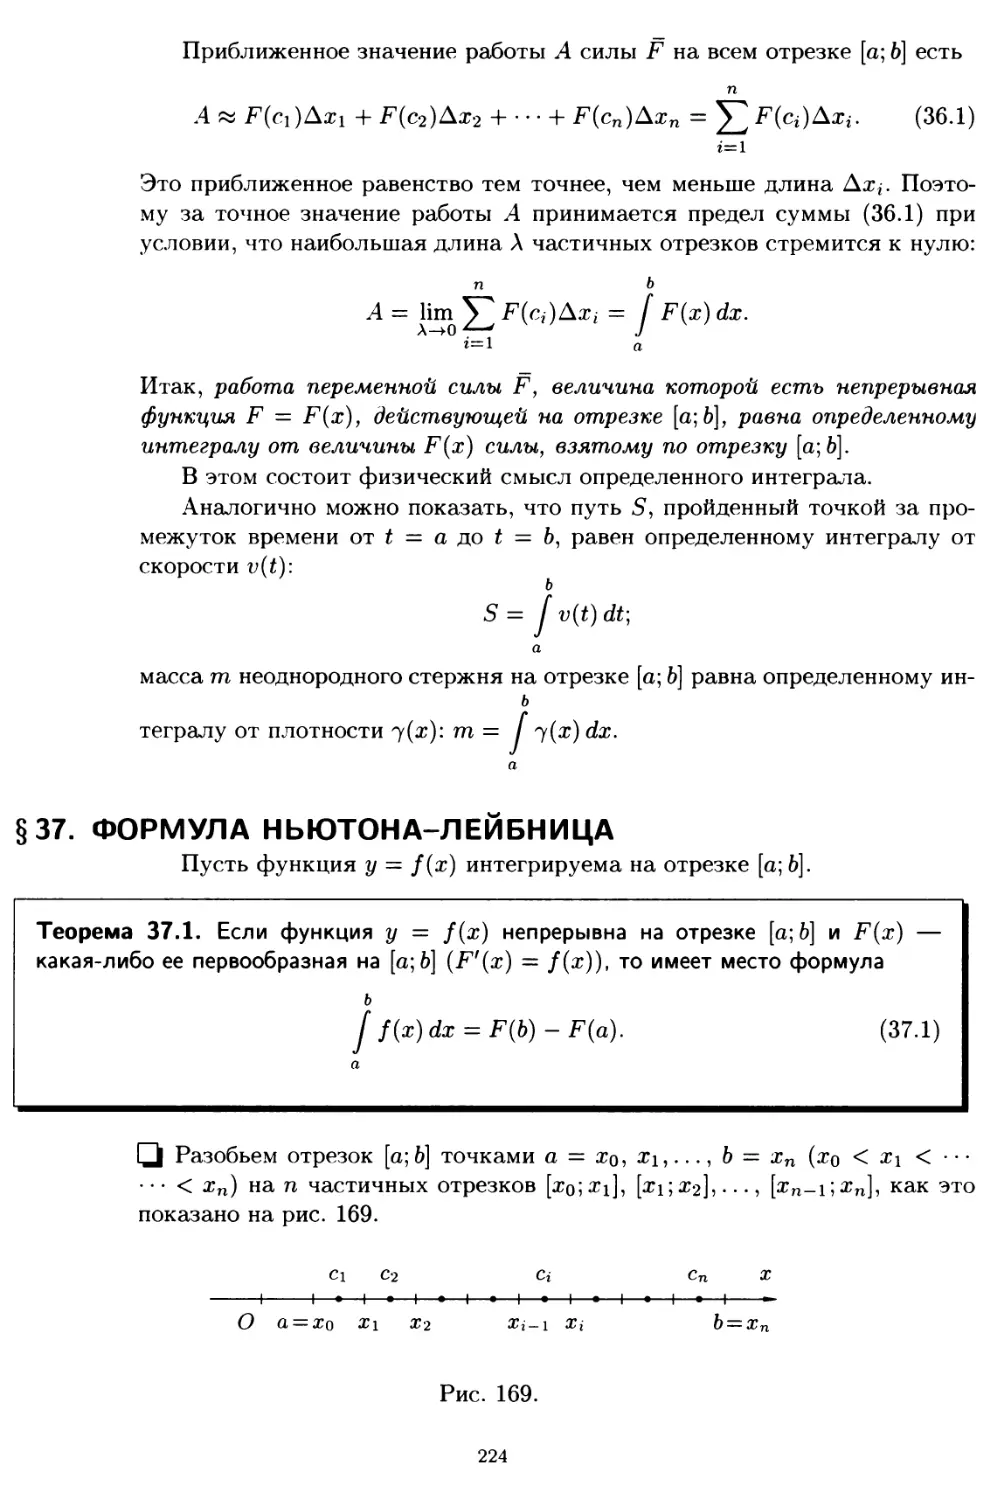 § 37. Формула Ньютона-Лейбница